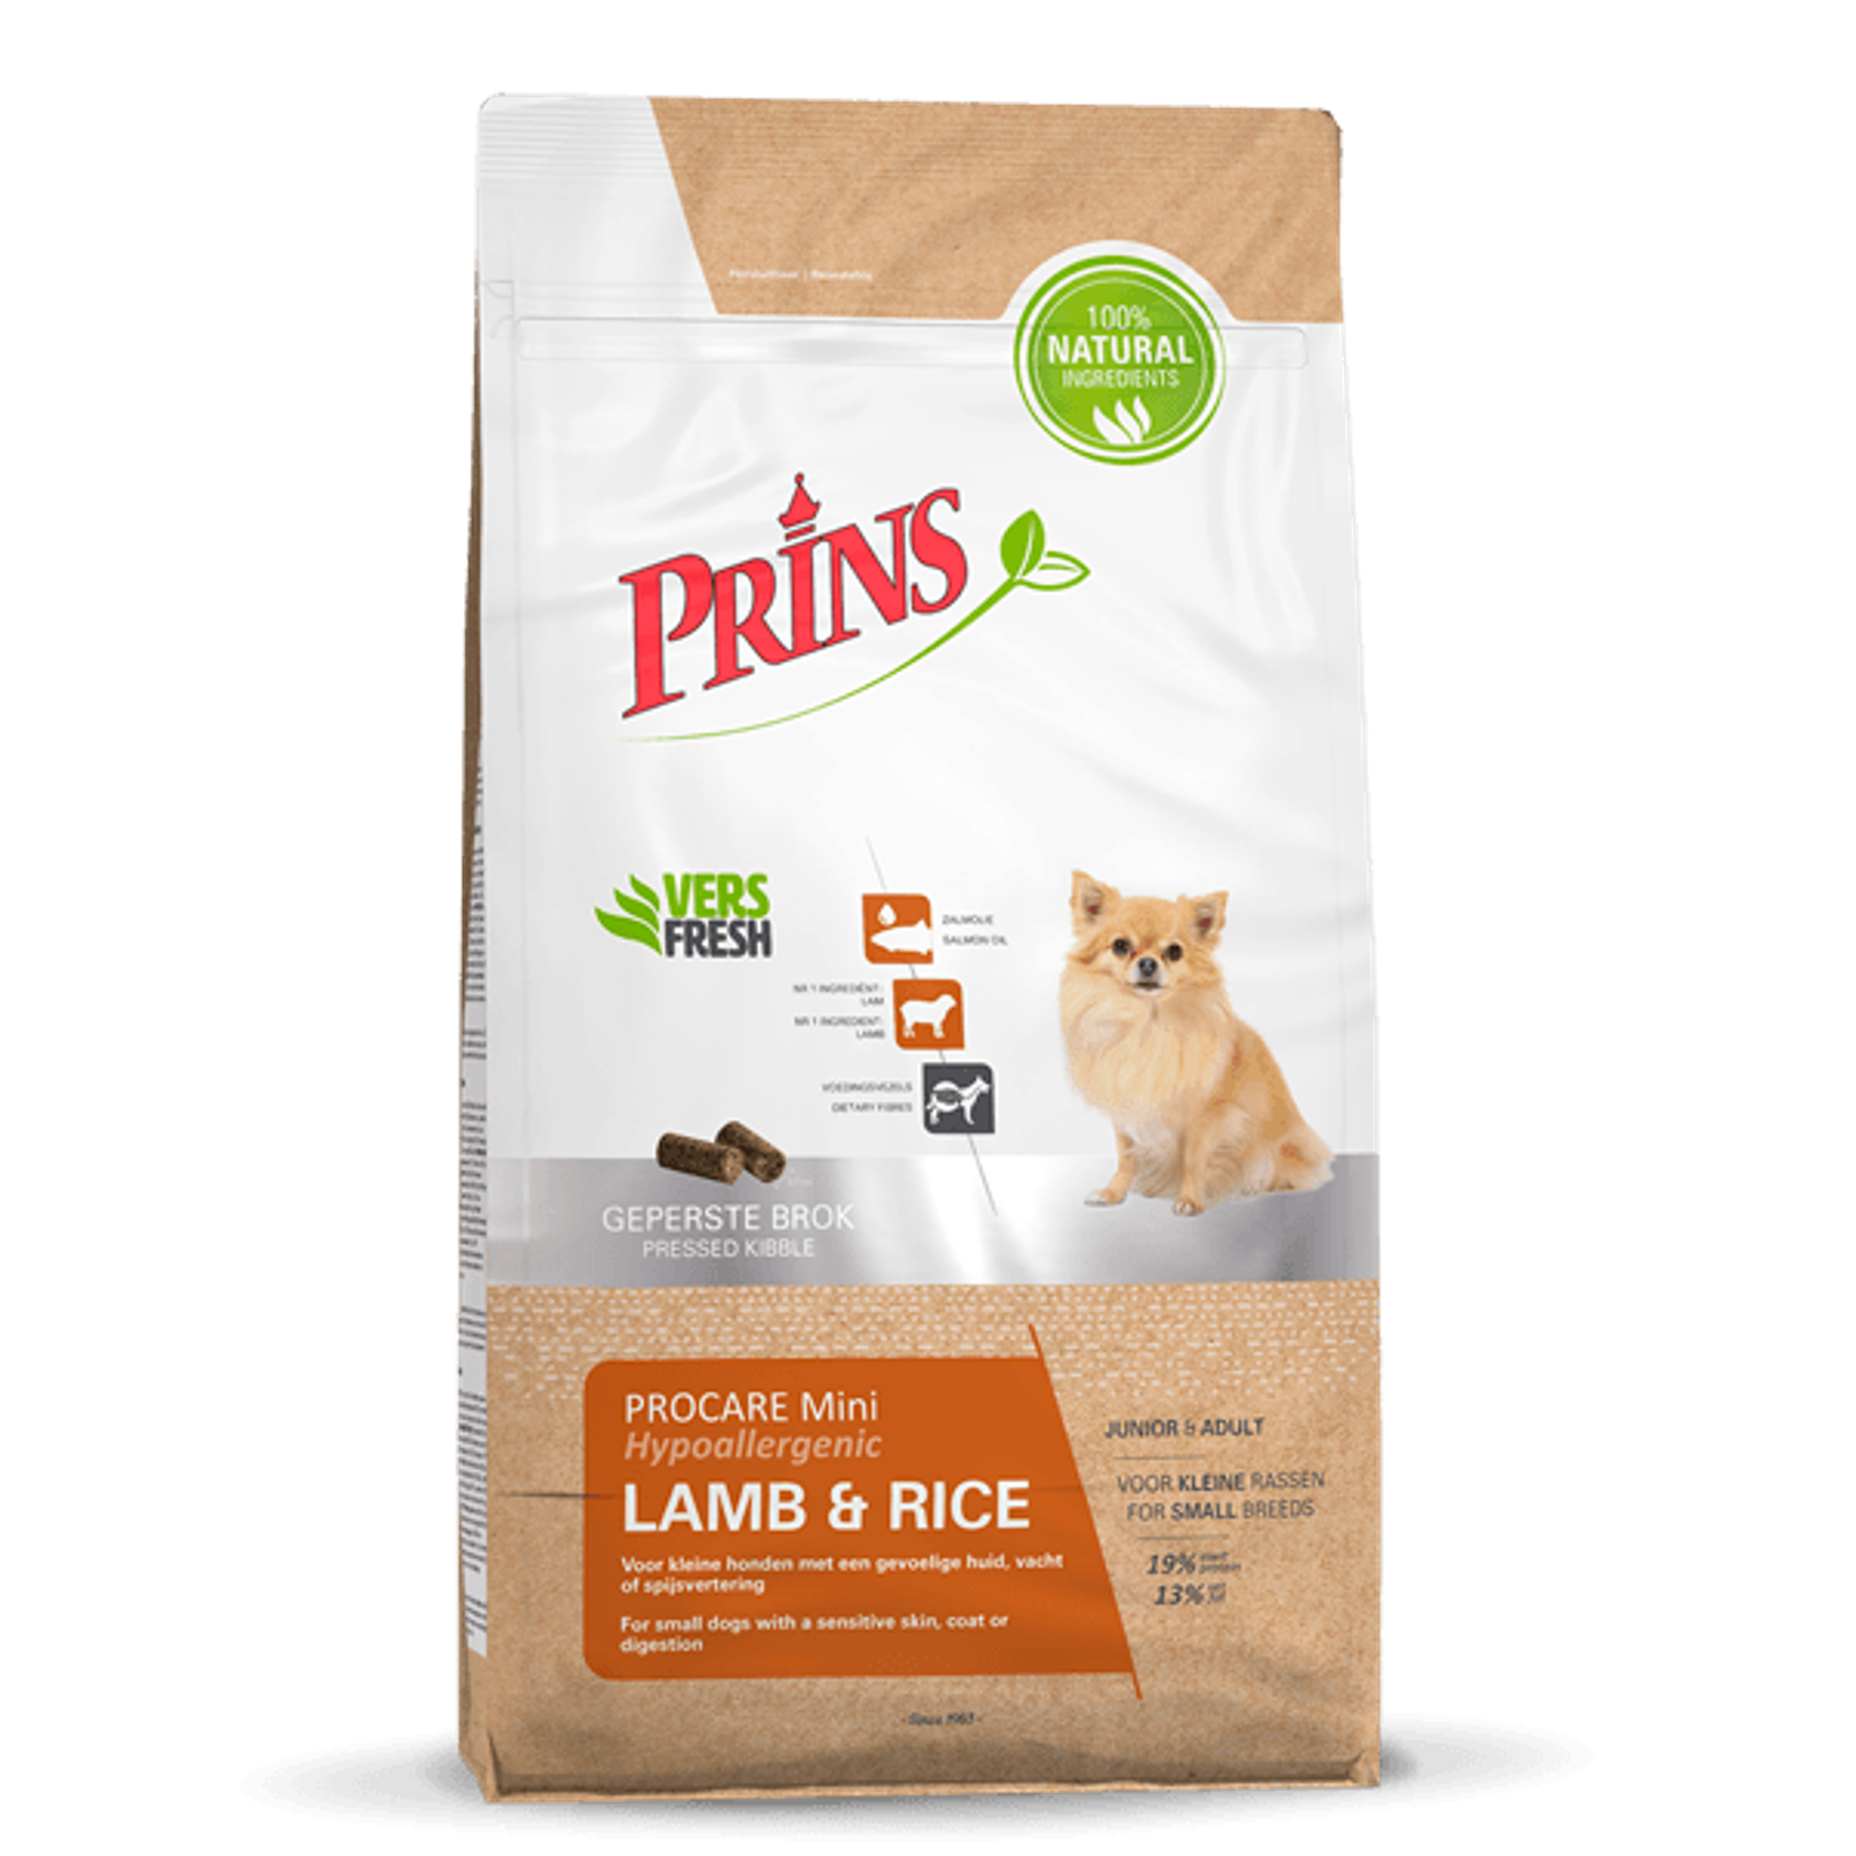 Prins ProCare MINI LAMB & RICE Hypoallergic, Dry Dog Food With Lamb, 15kg